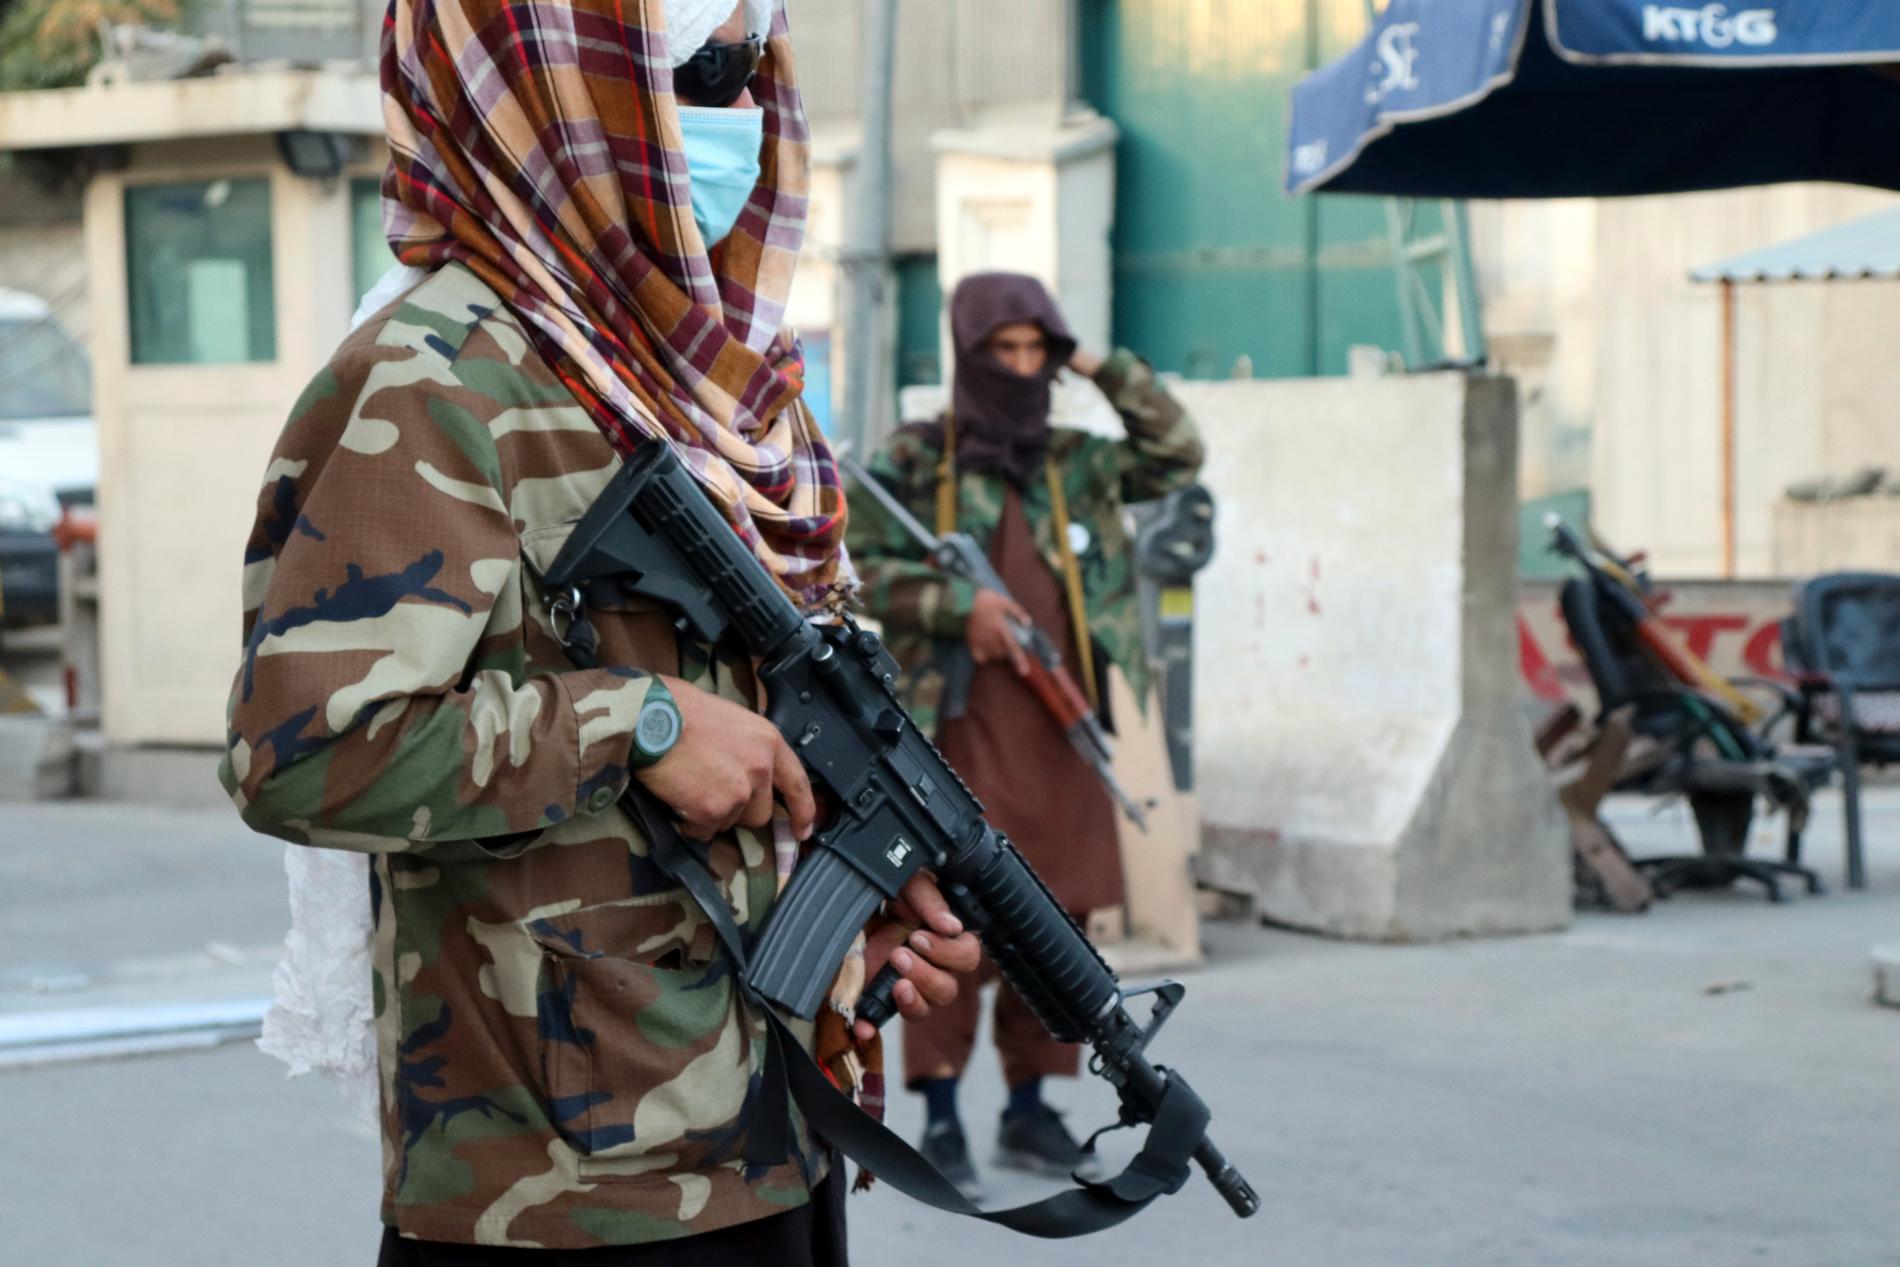 Talibaner vid en kontroll i Kabul.